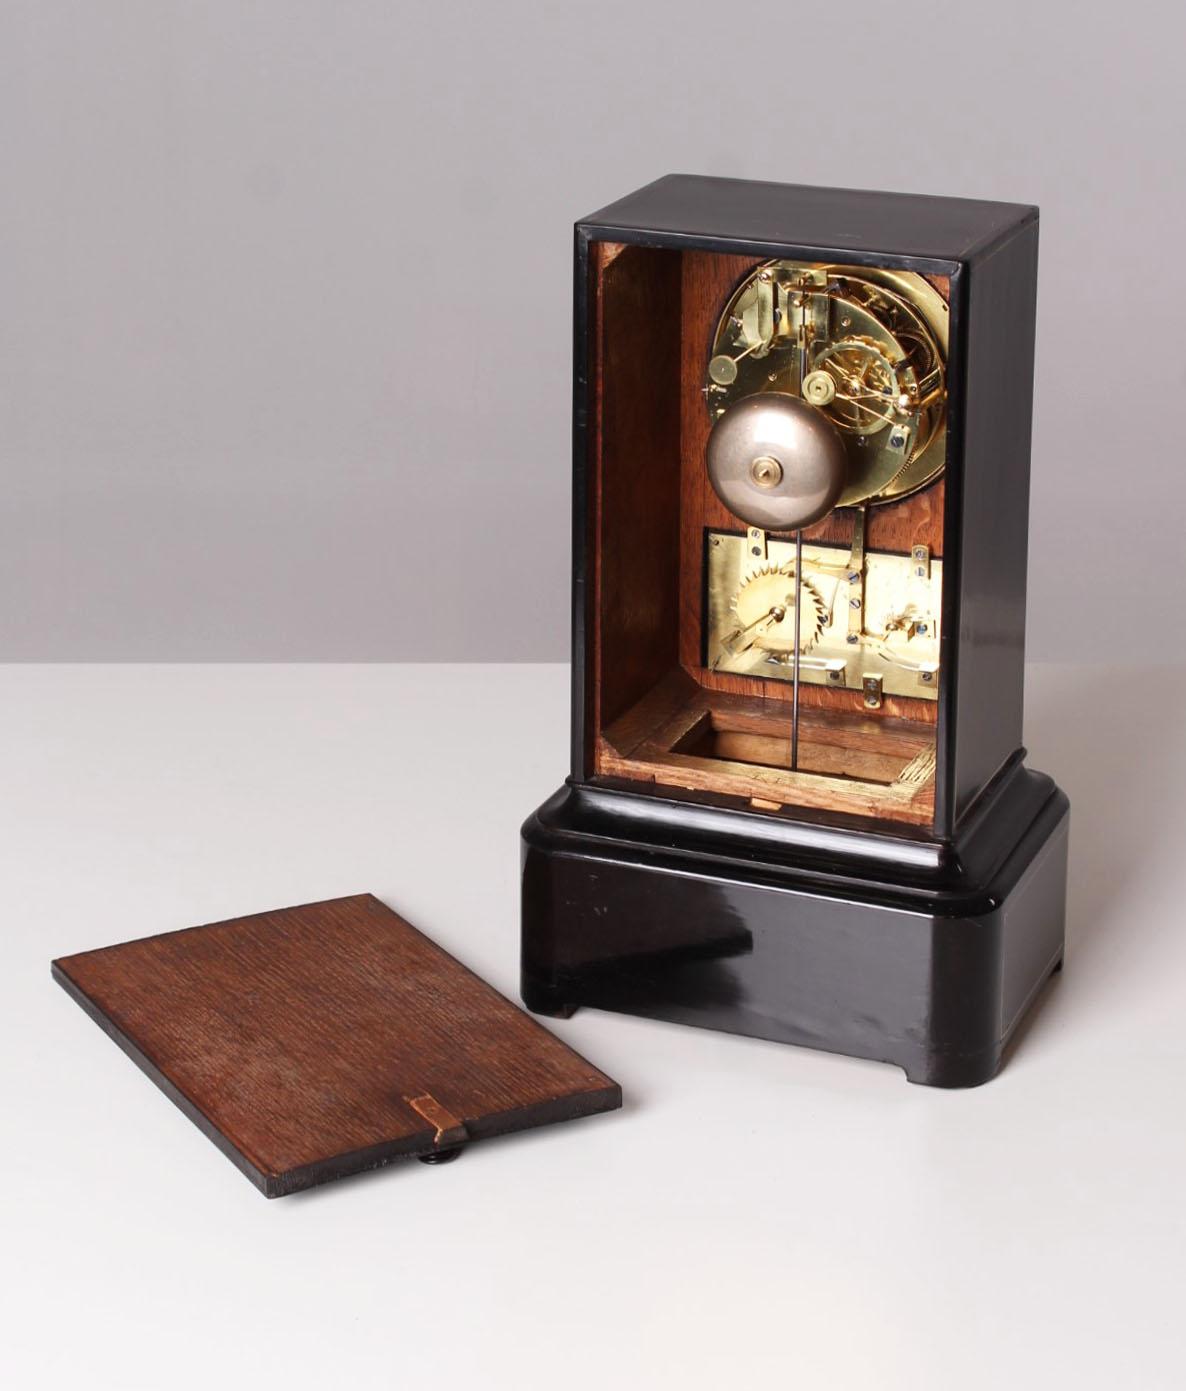 19th Century Table Clock with Calendar, Ebonized Wood, France, circa 1840-1860 For Sale 3